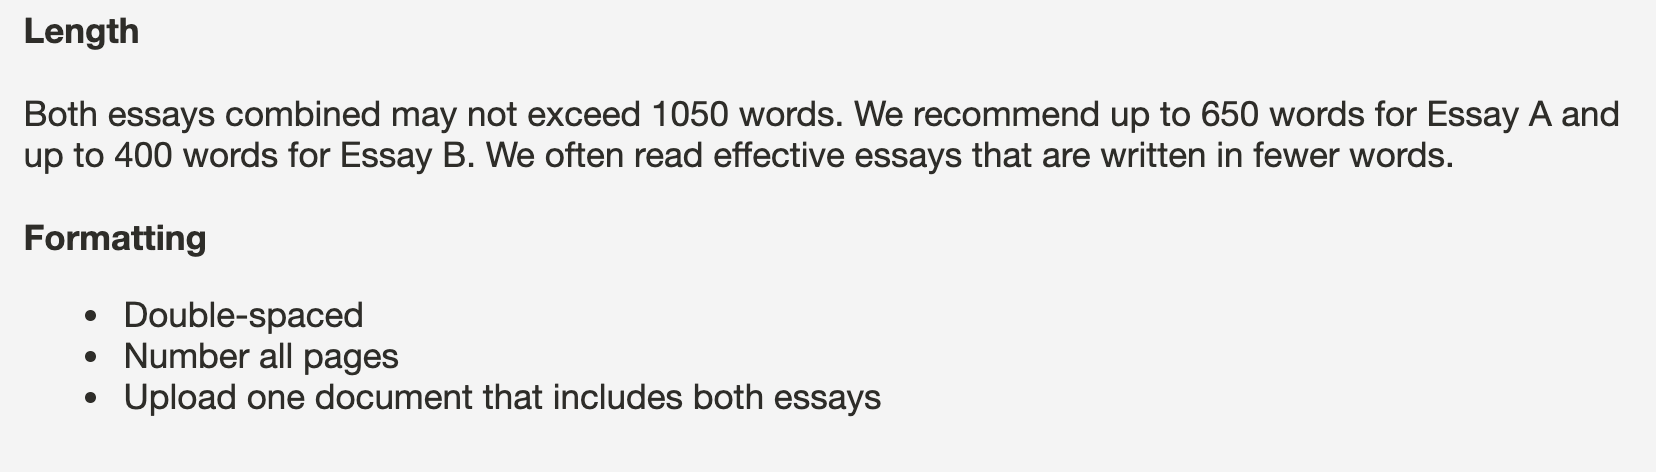 stanford gsb essay word limit